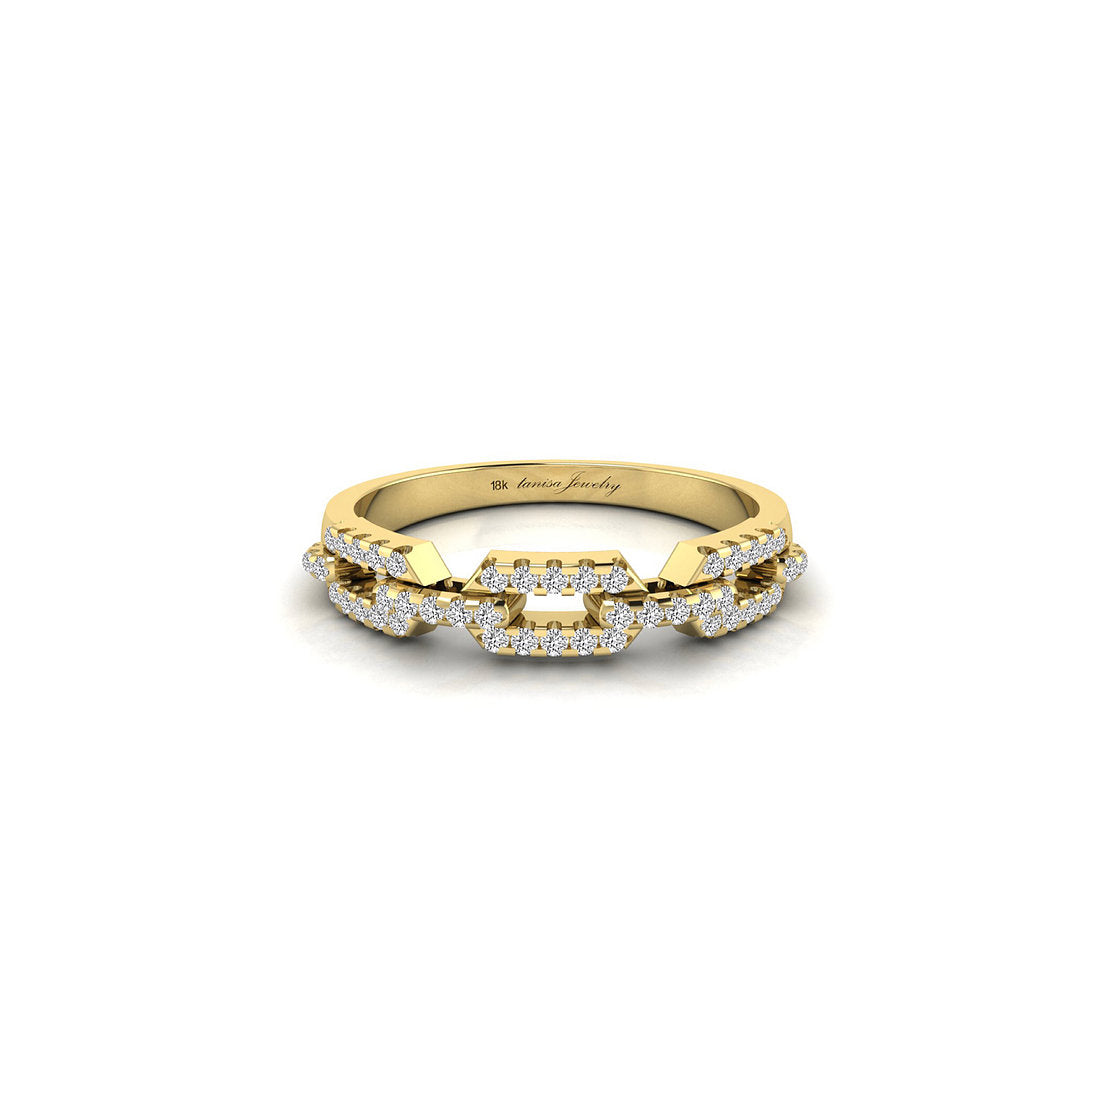 Jane's Essentials - 18K Yellow Gold Diamond Links Ring